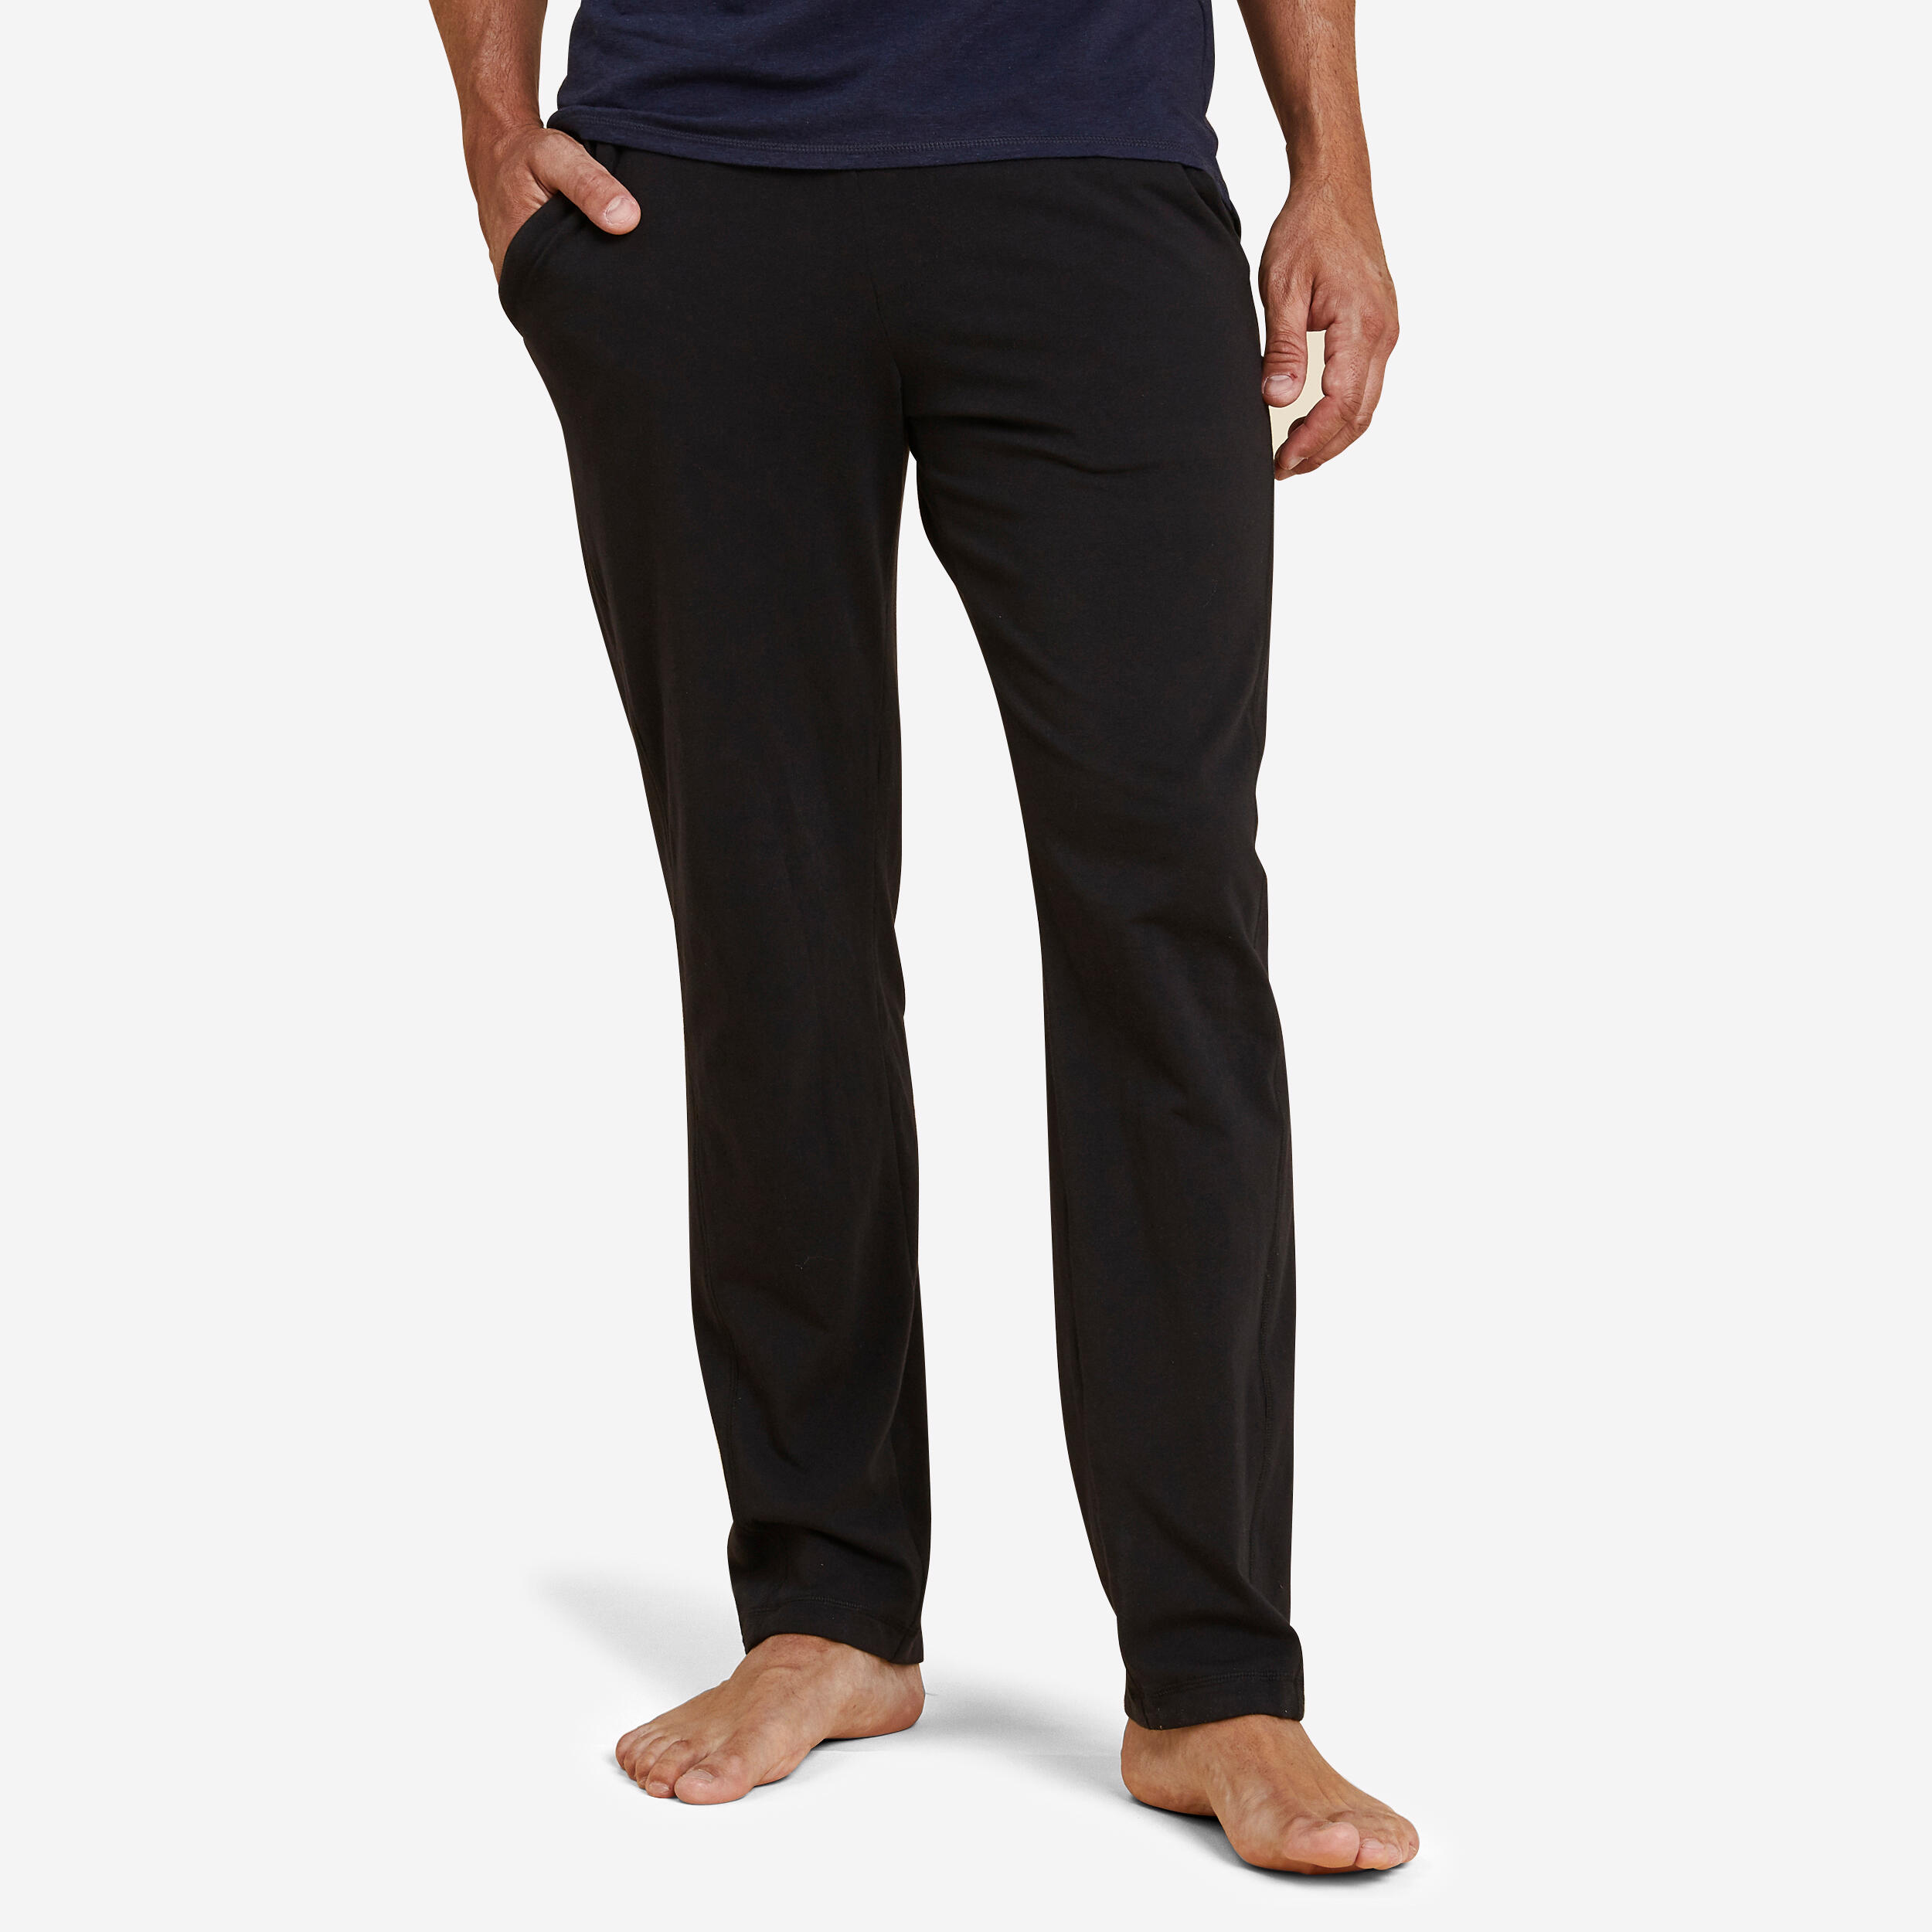 Men's Yoga Pants - Grey - Dark grey - Kimjaly - Decathlon